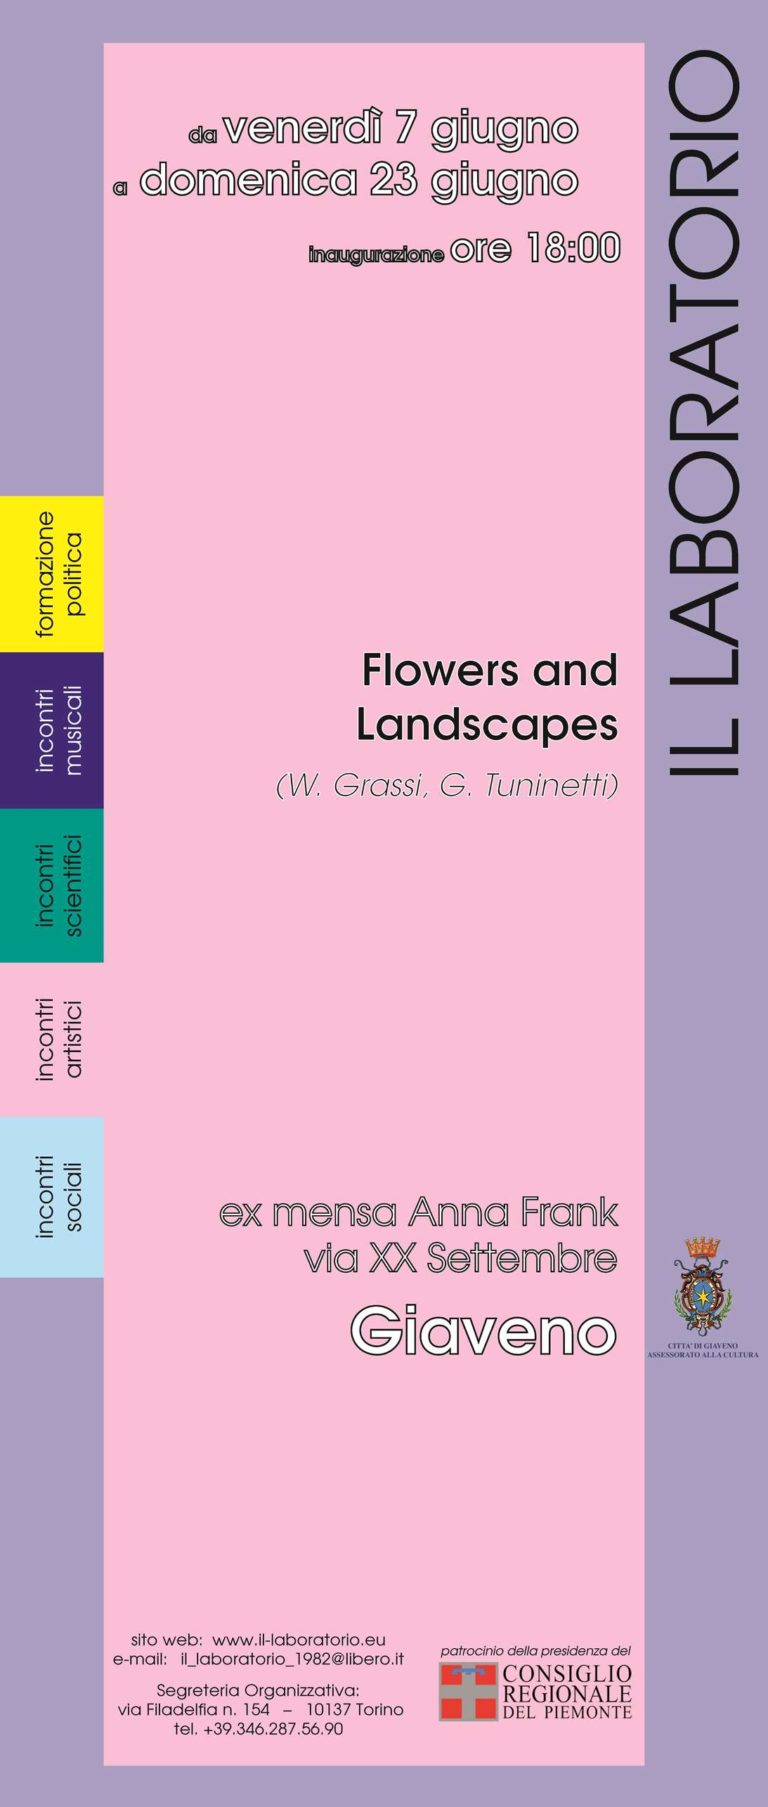 Flowers and Landscapes – Walter Grassi e G. Tuninetti